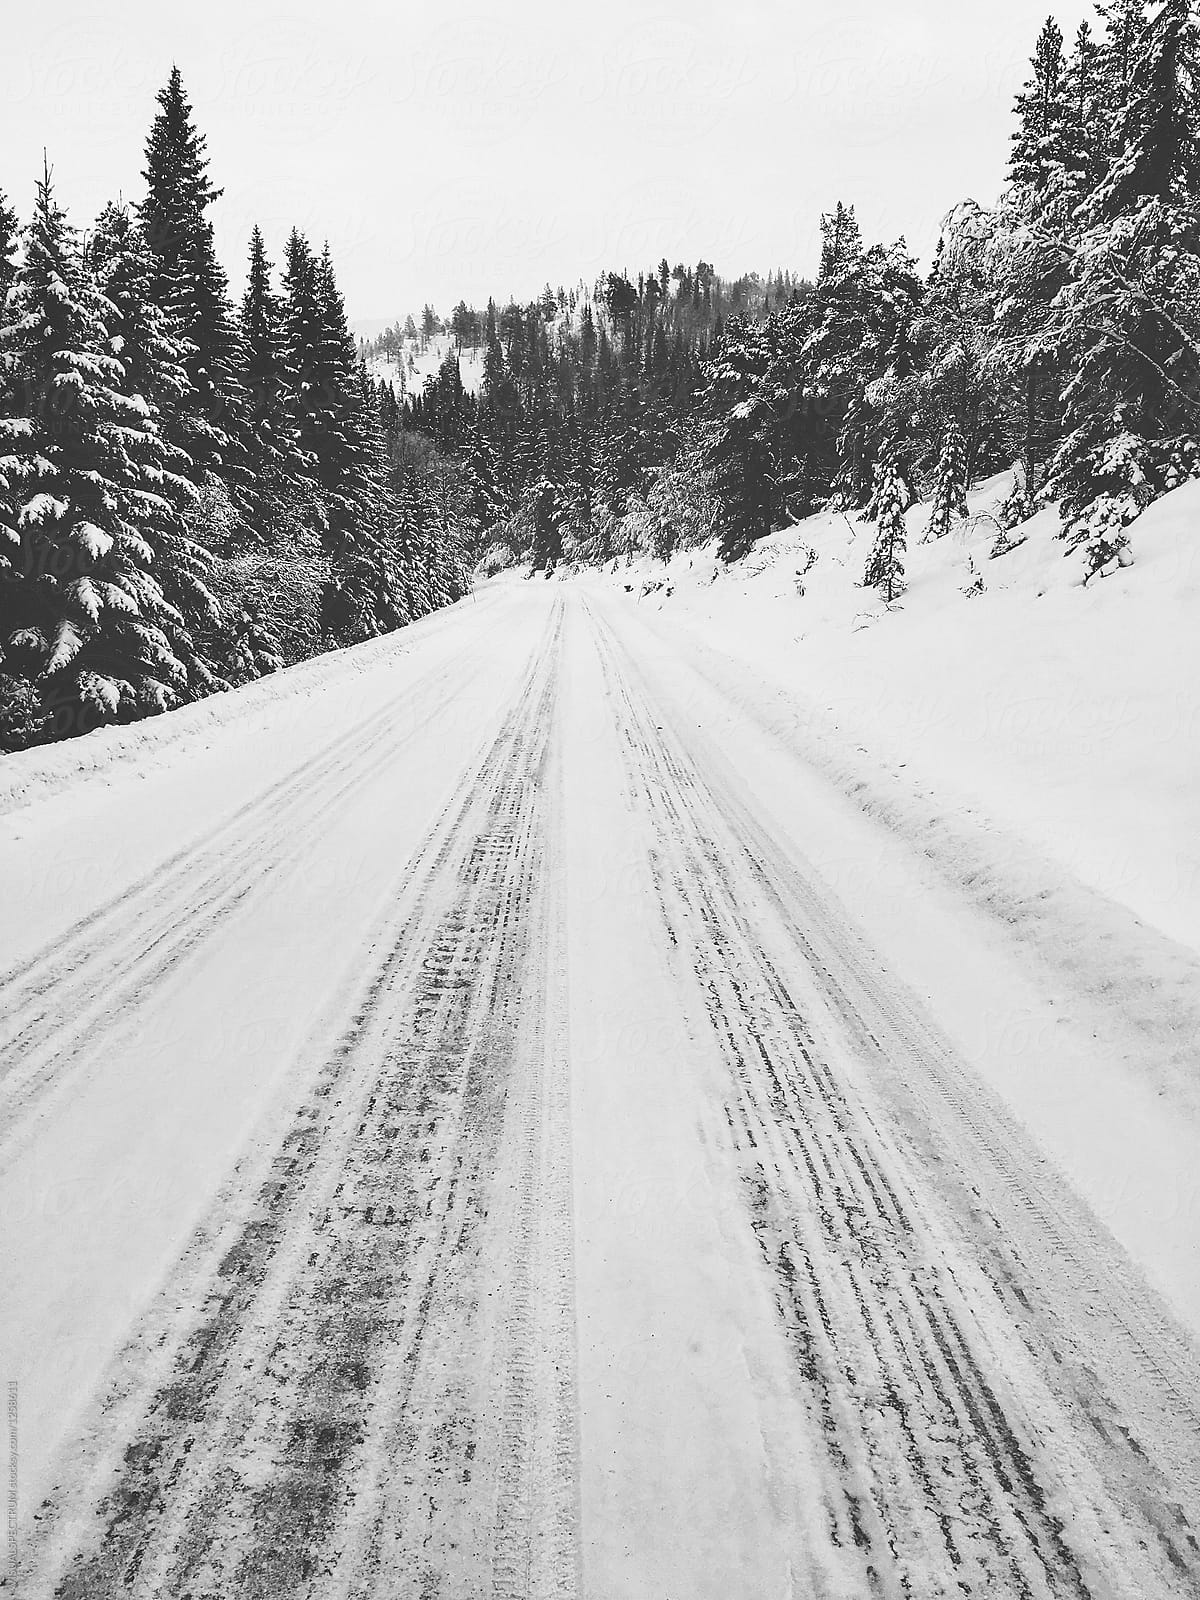 White Winter in Scandinavia - Mountain Road Through Fir Tree Forest